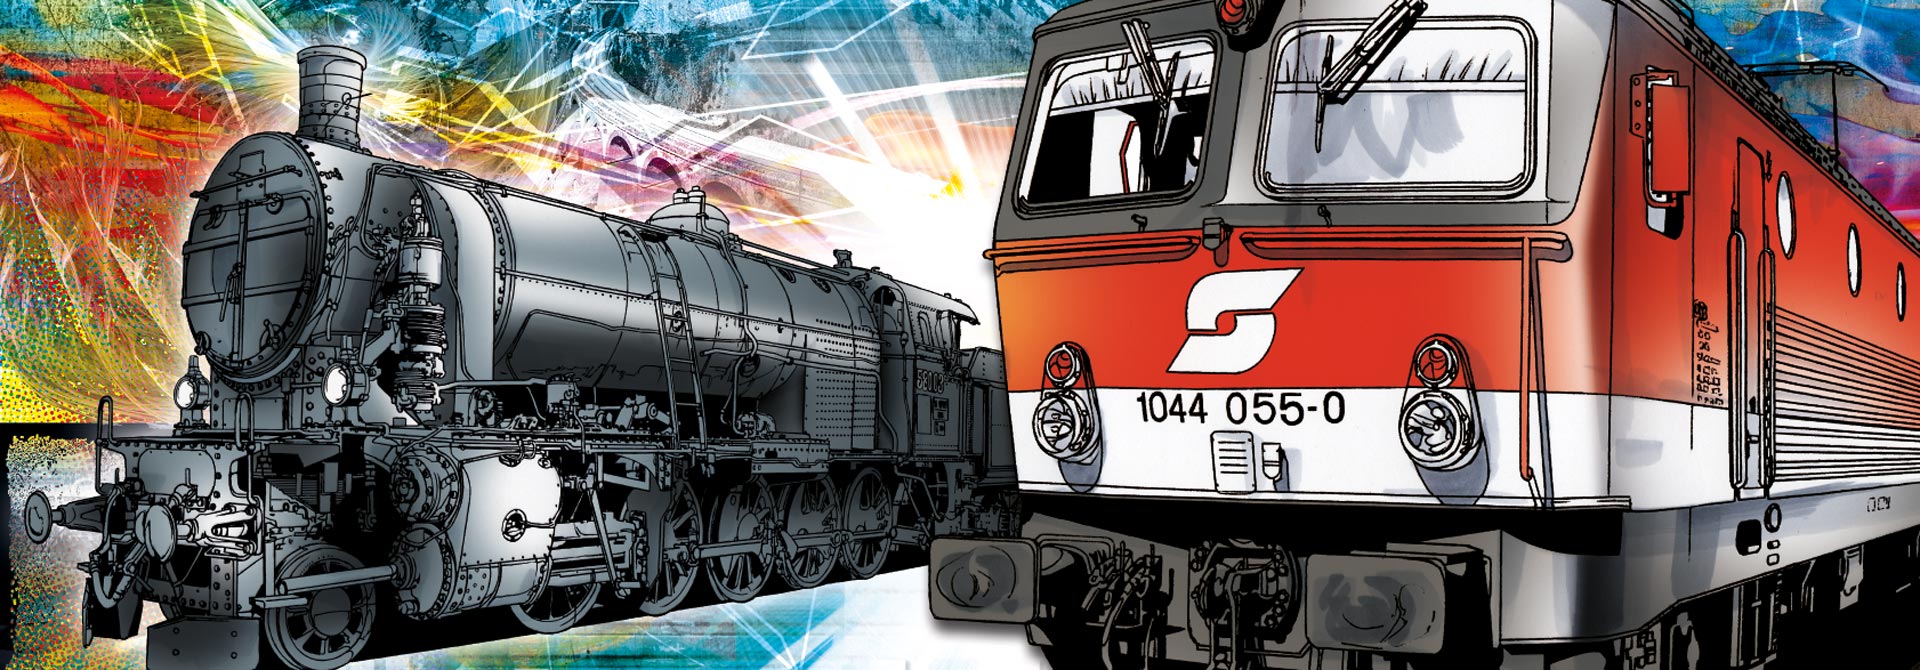 Bildausschnitt "ÖBB Lokomotiven" für den Headerbereich